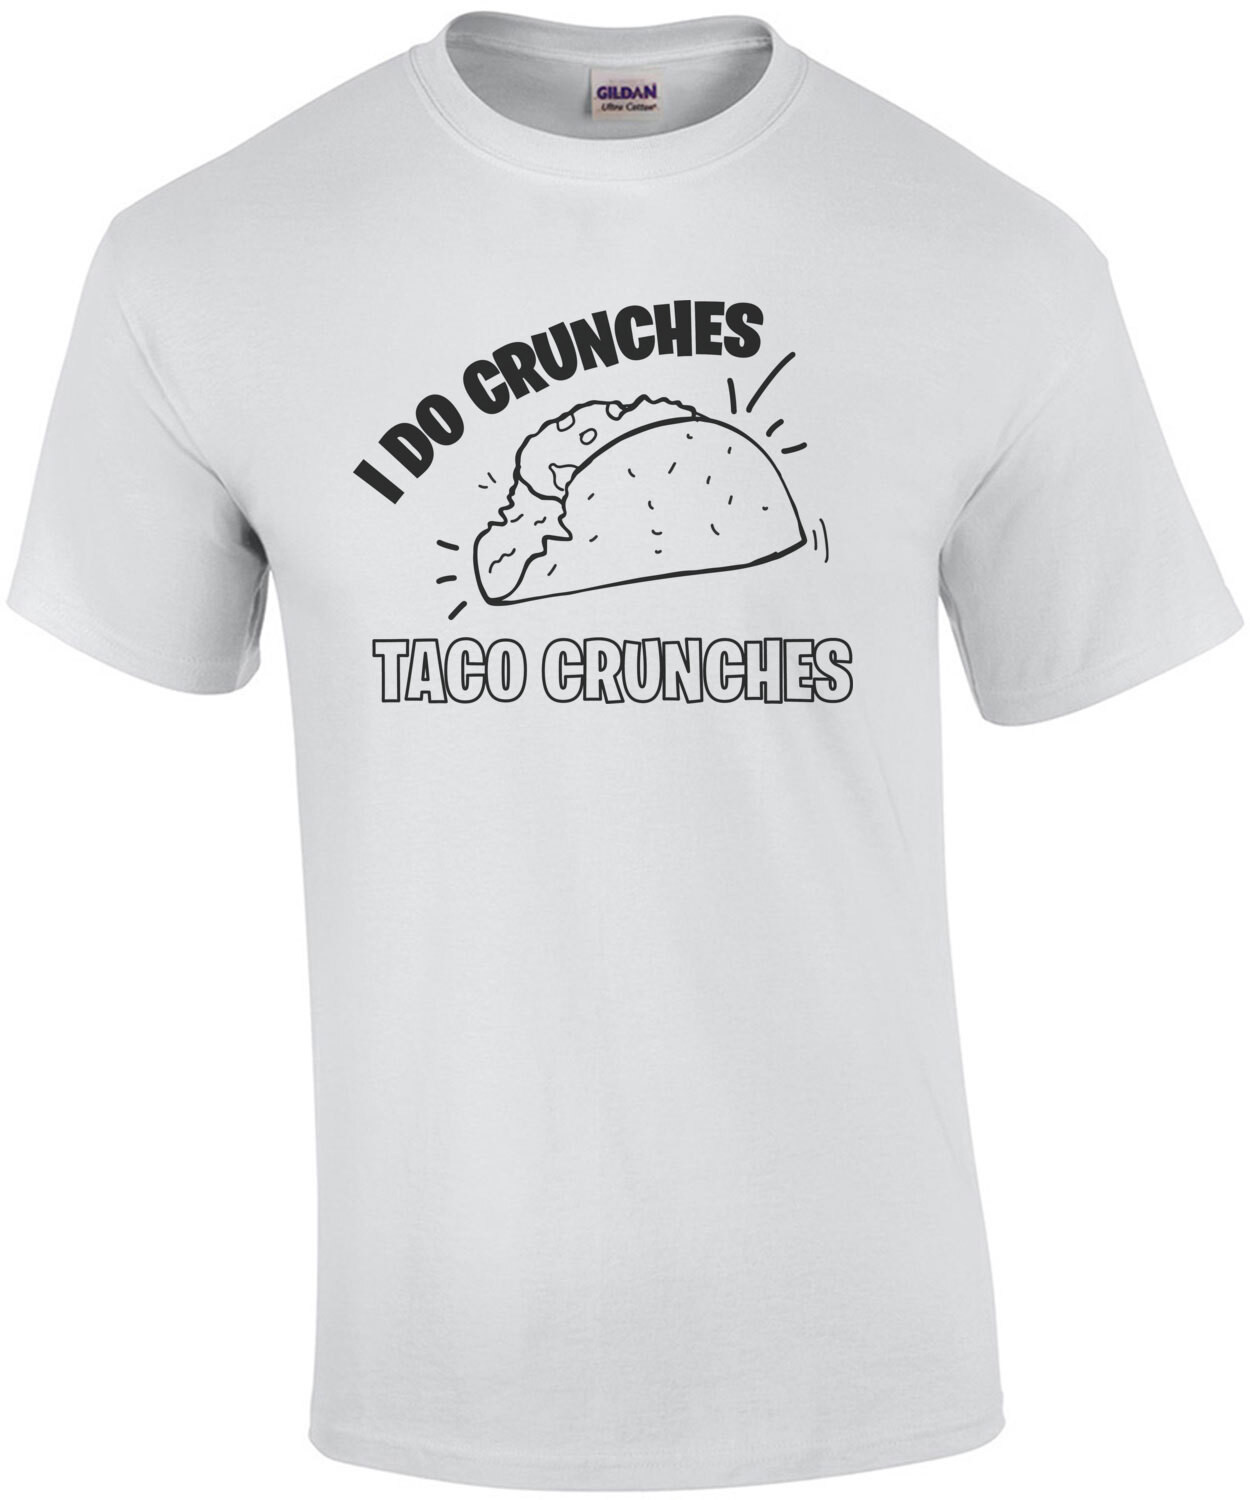 I do crunches - taco crunches - fat guy t-shirt